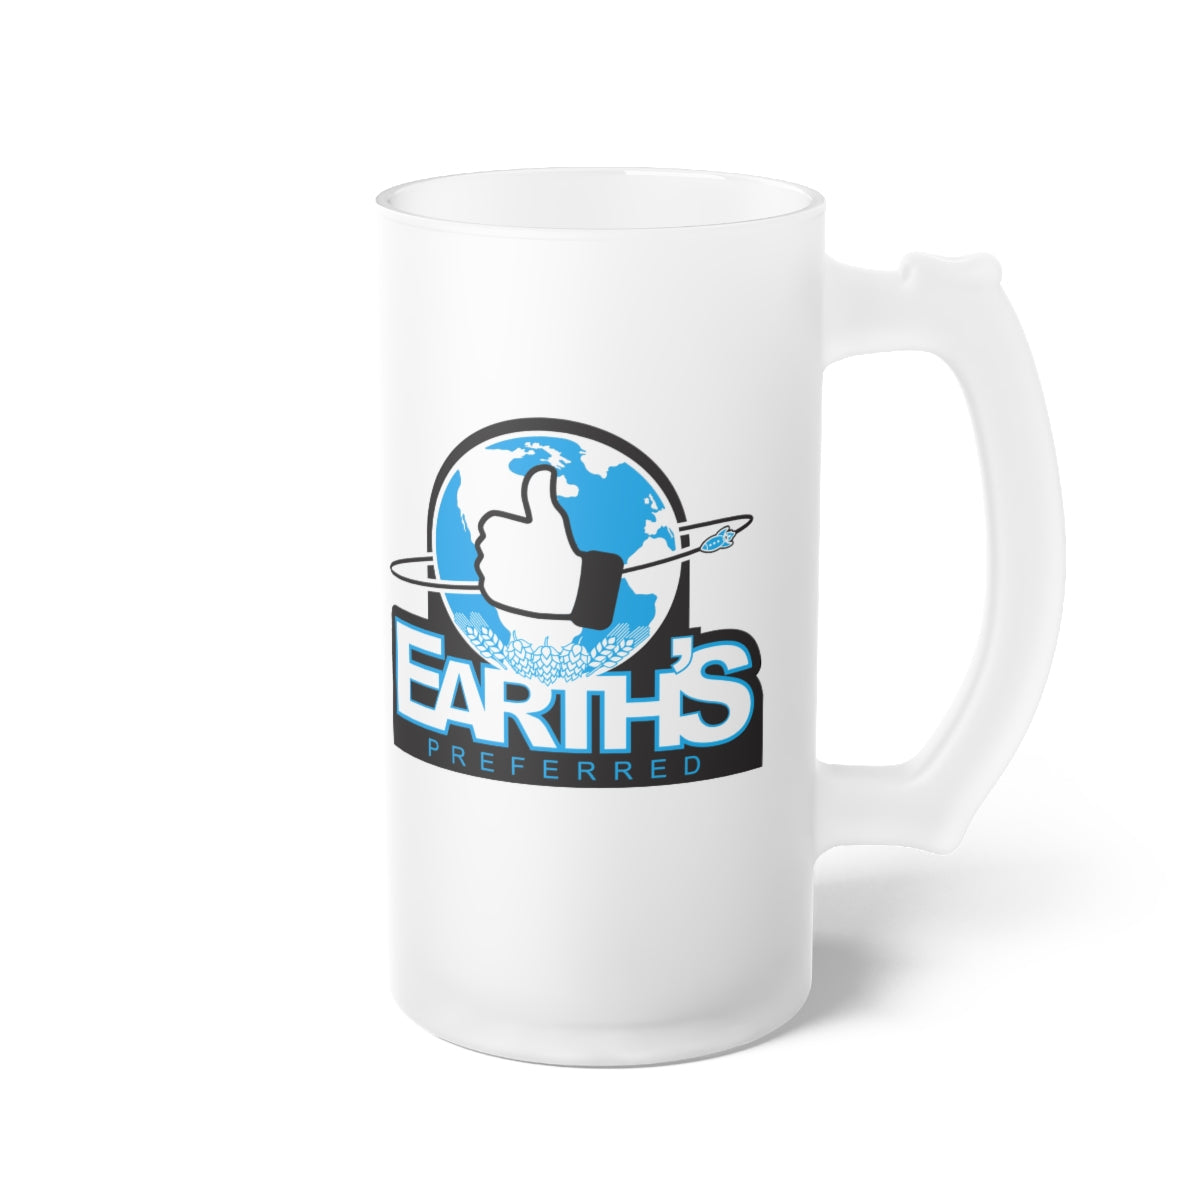 Black Ocean: Earth's Preferred frosted glass beer mug